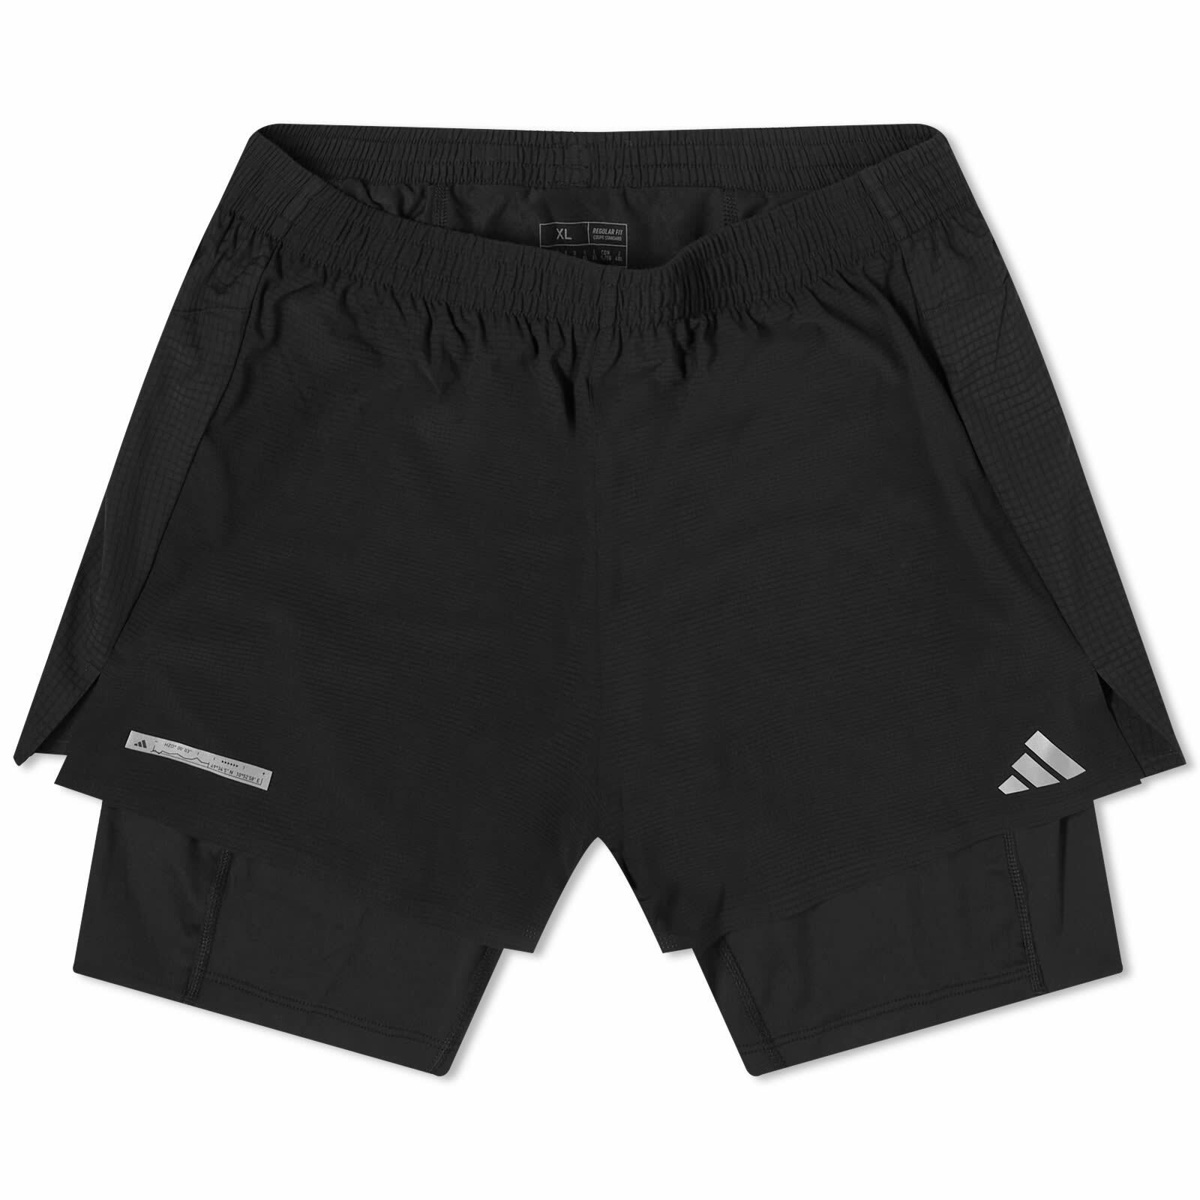 adidas Ultimate Running Short Leggings - Black